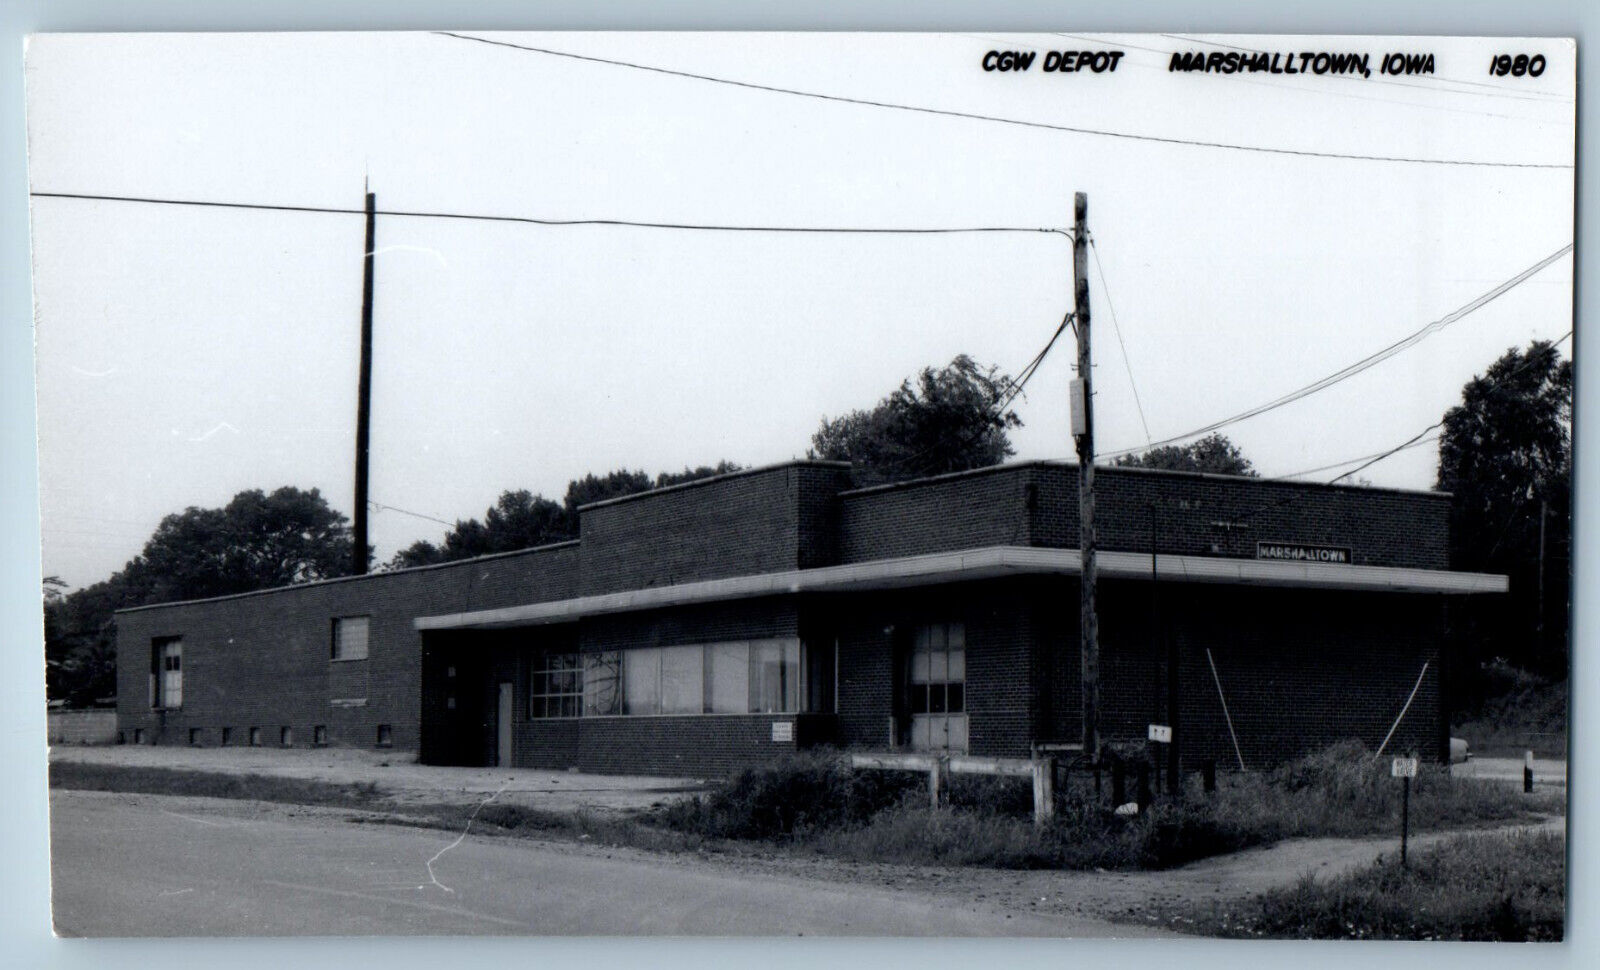 Marshalltown Iowa IA Postcard CGW Depot Station 1980 Unposted RPPC Photo